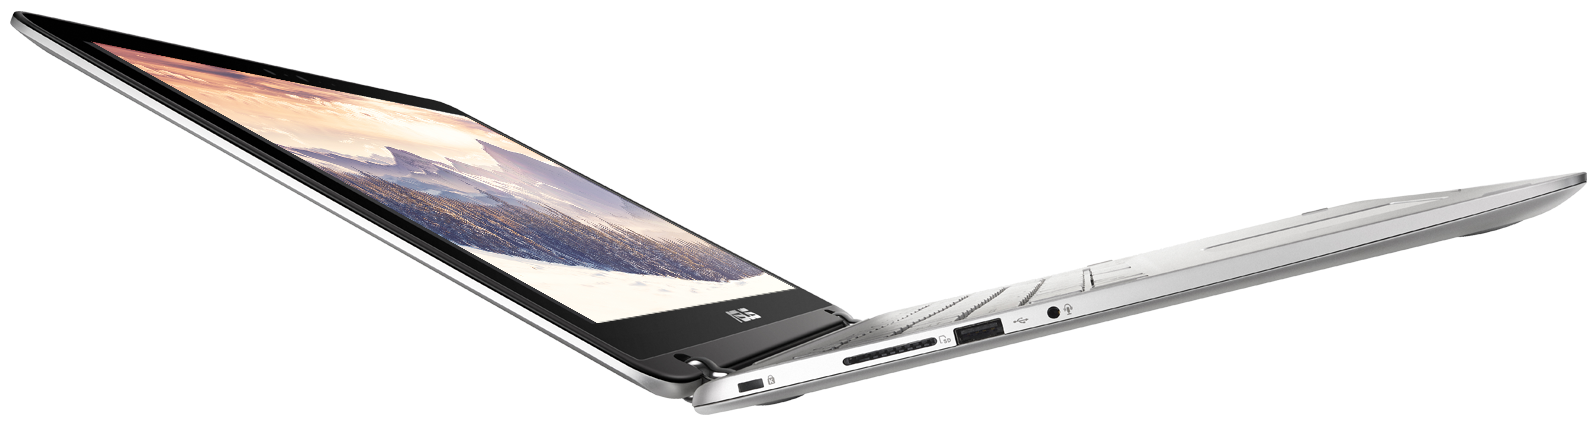 Asus Zenbook Flip UX560UQ-FZ018R